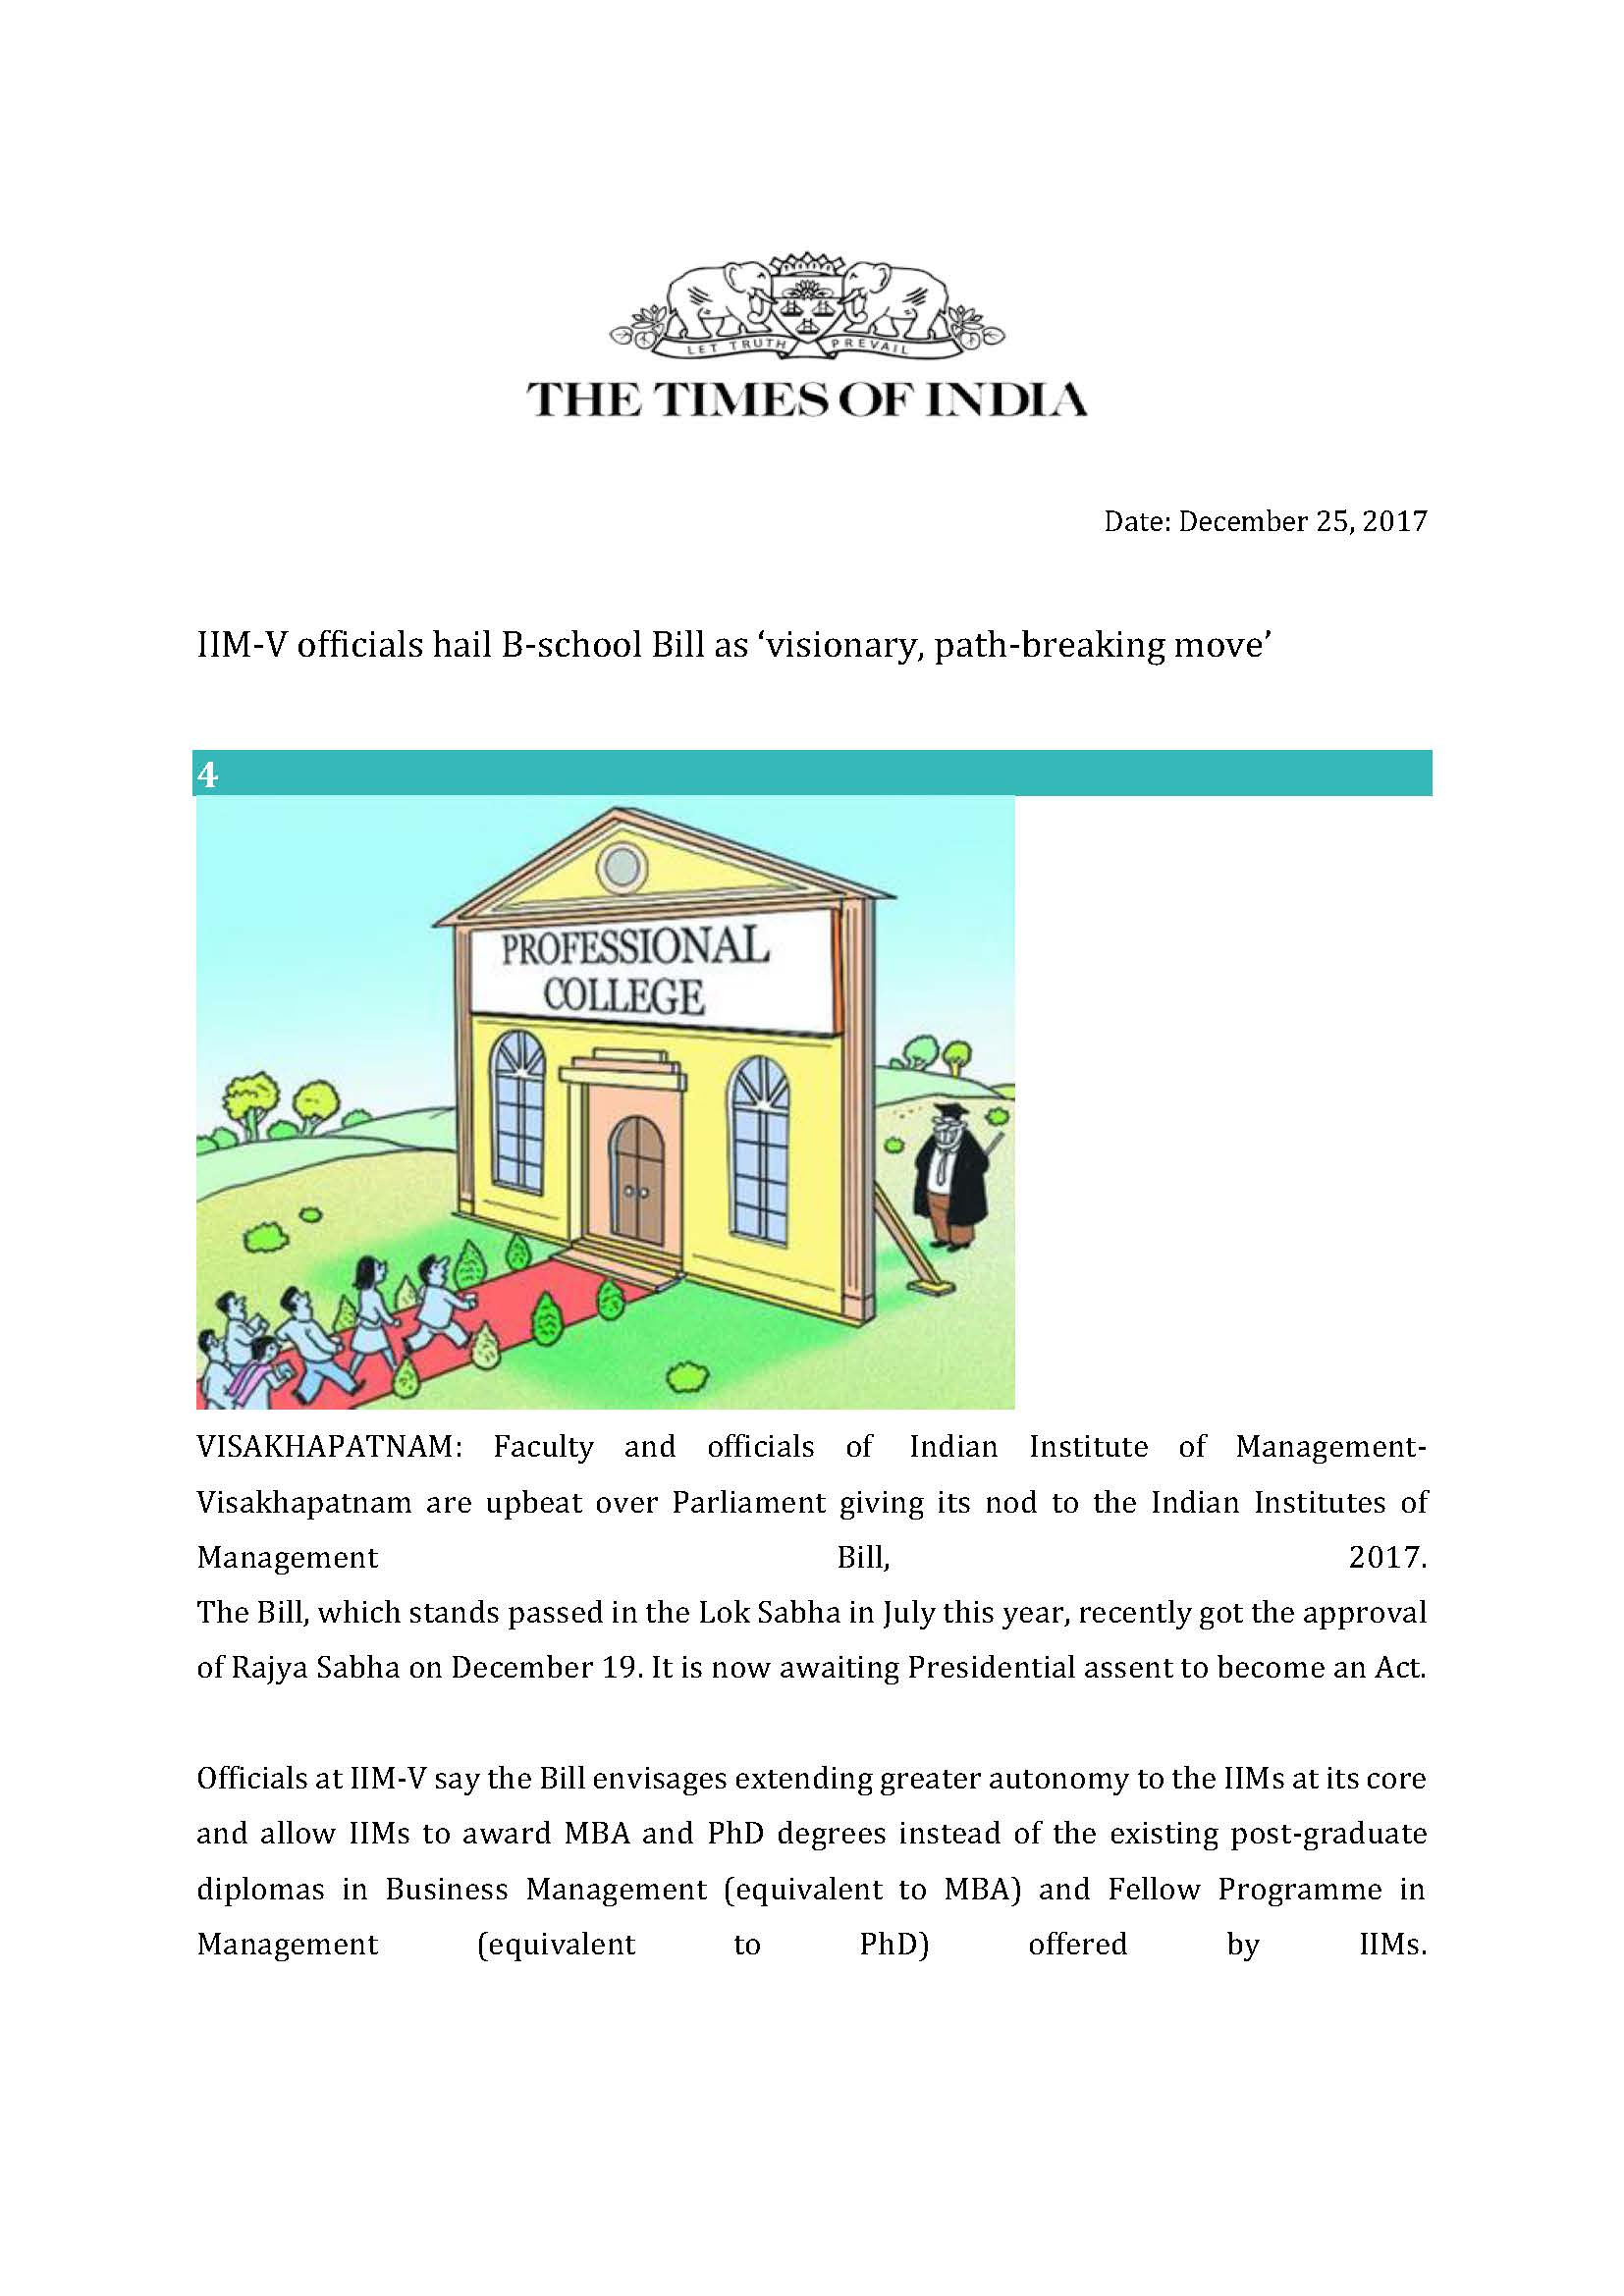 IIM-V officials hail B-school Bill as visionary path-breaking move - 25.12.2017